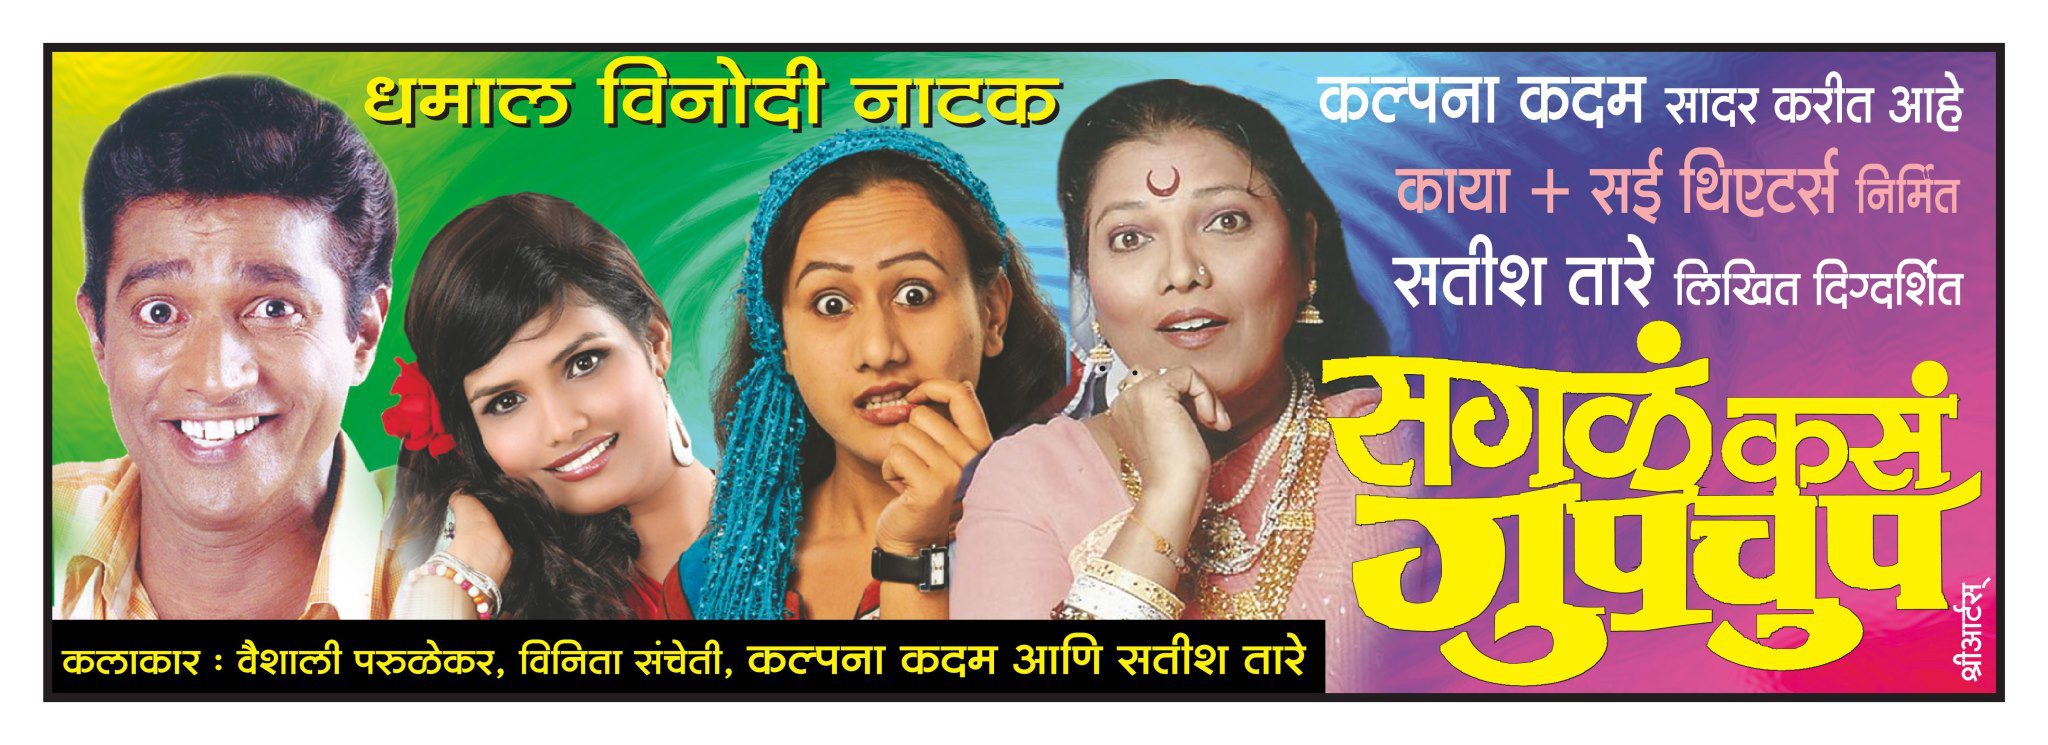 Sagal Kas Gupchup Marathi Comedy Natak Cast,Photos,Play -Drama